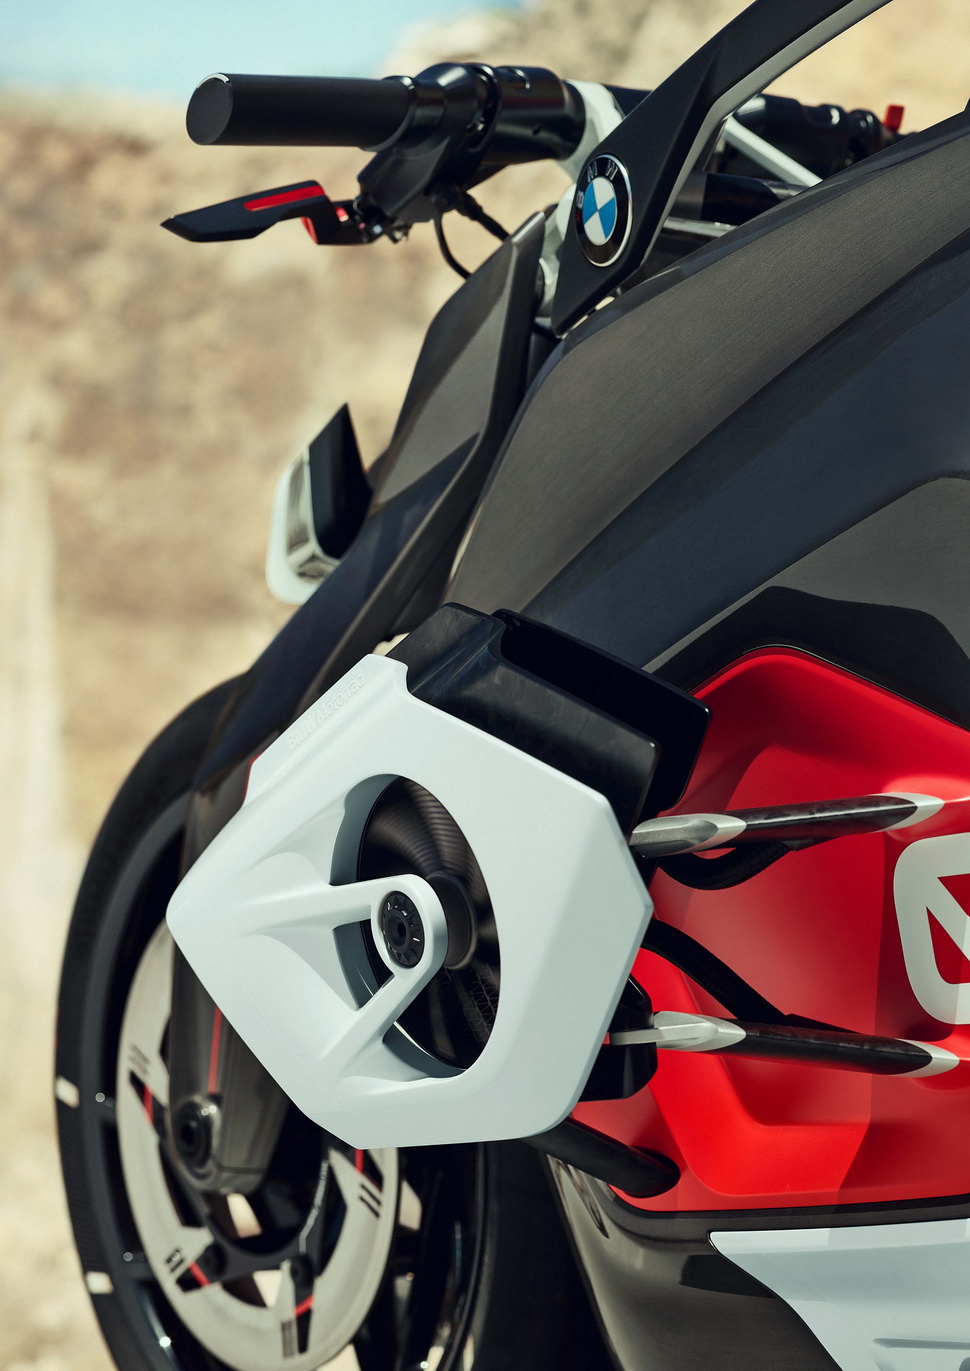 BMW Motorrad Vision DC Roadster concept